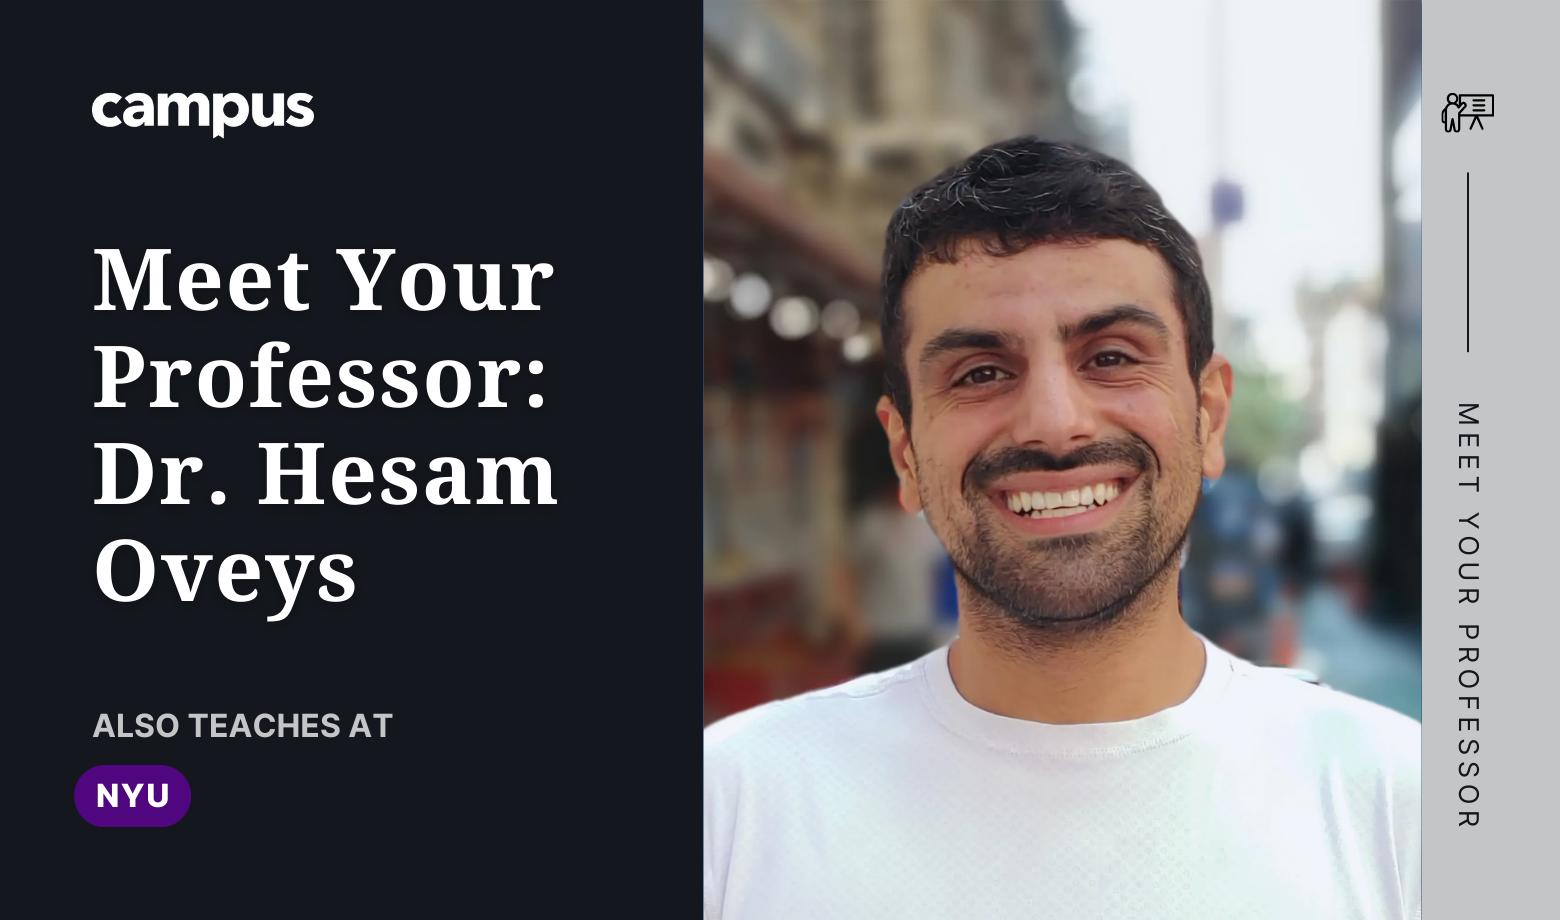 Meet Your Professor: Dr. Hesam Oveys